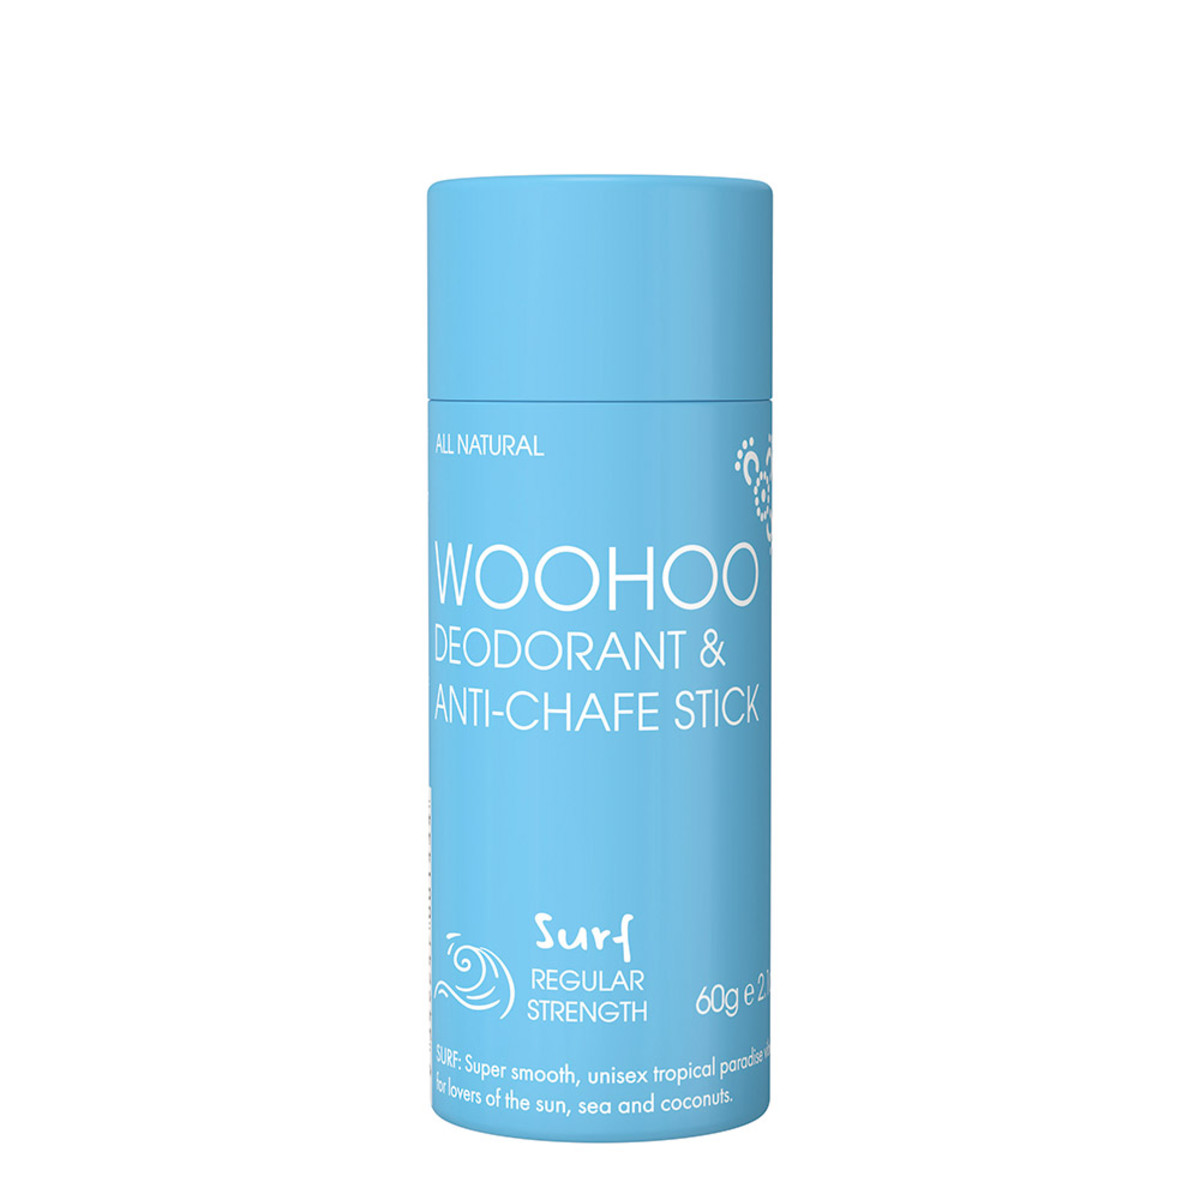 Woohoo Deodorant & Anti-Chafe Stick Surf 60g